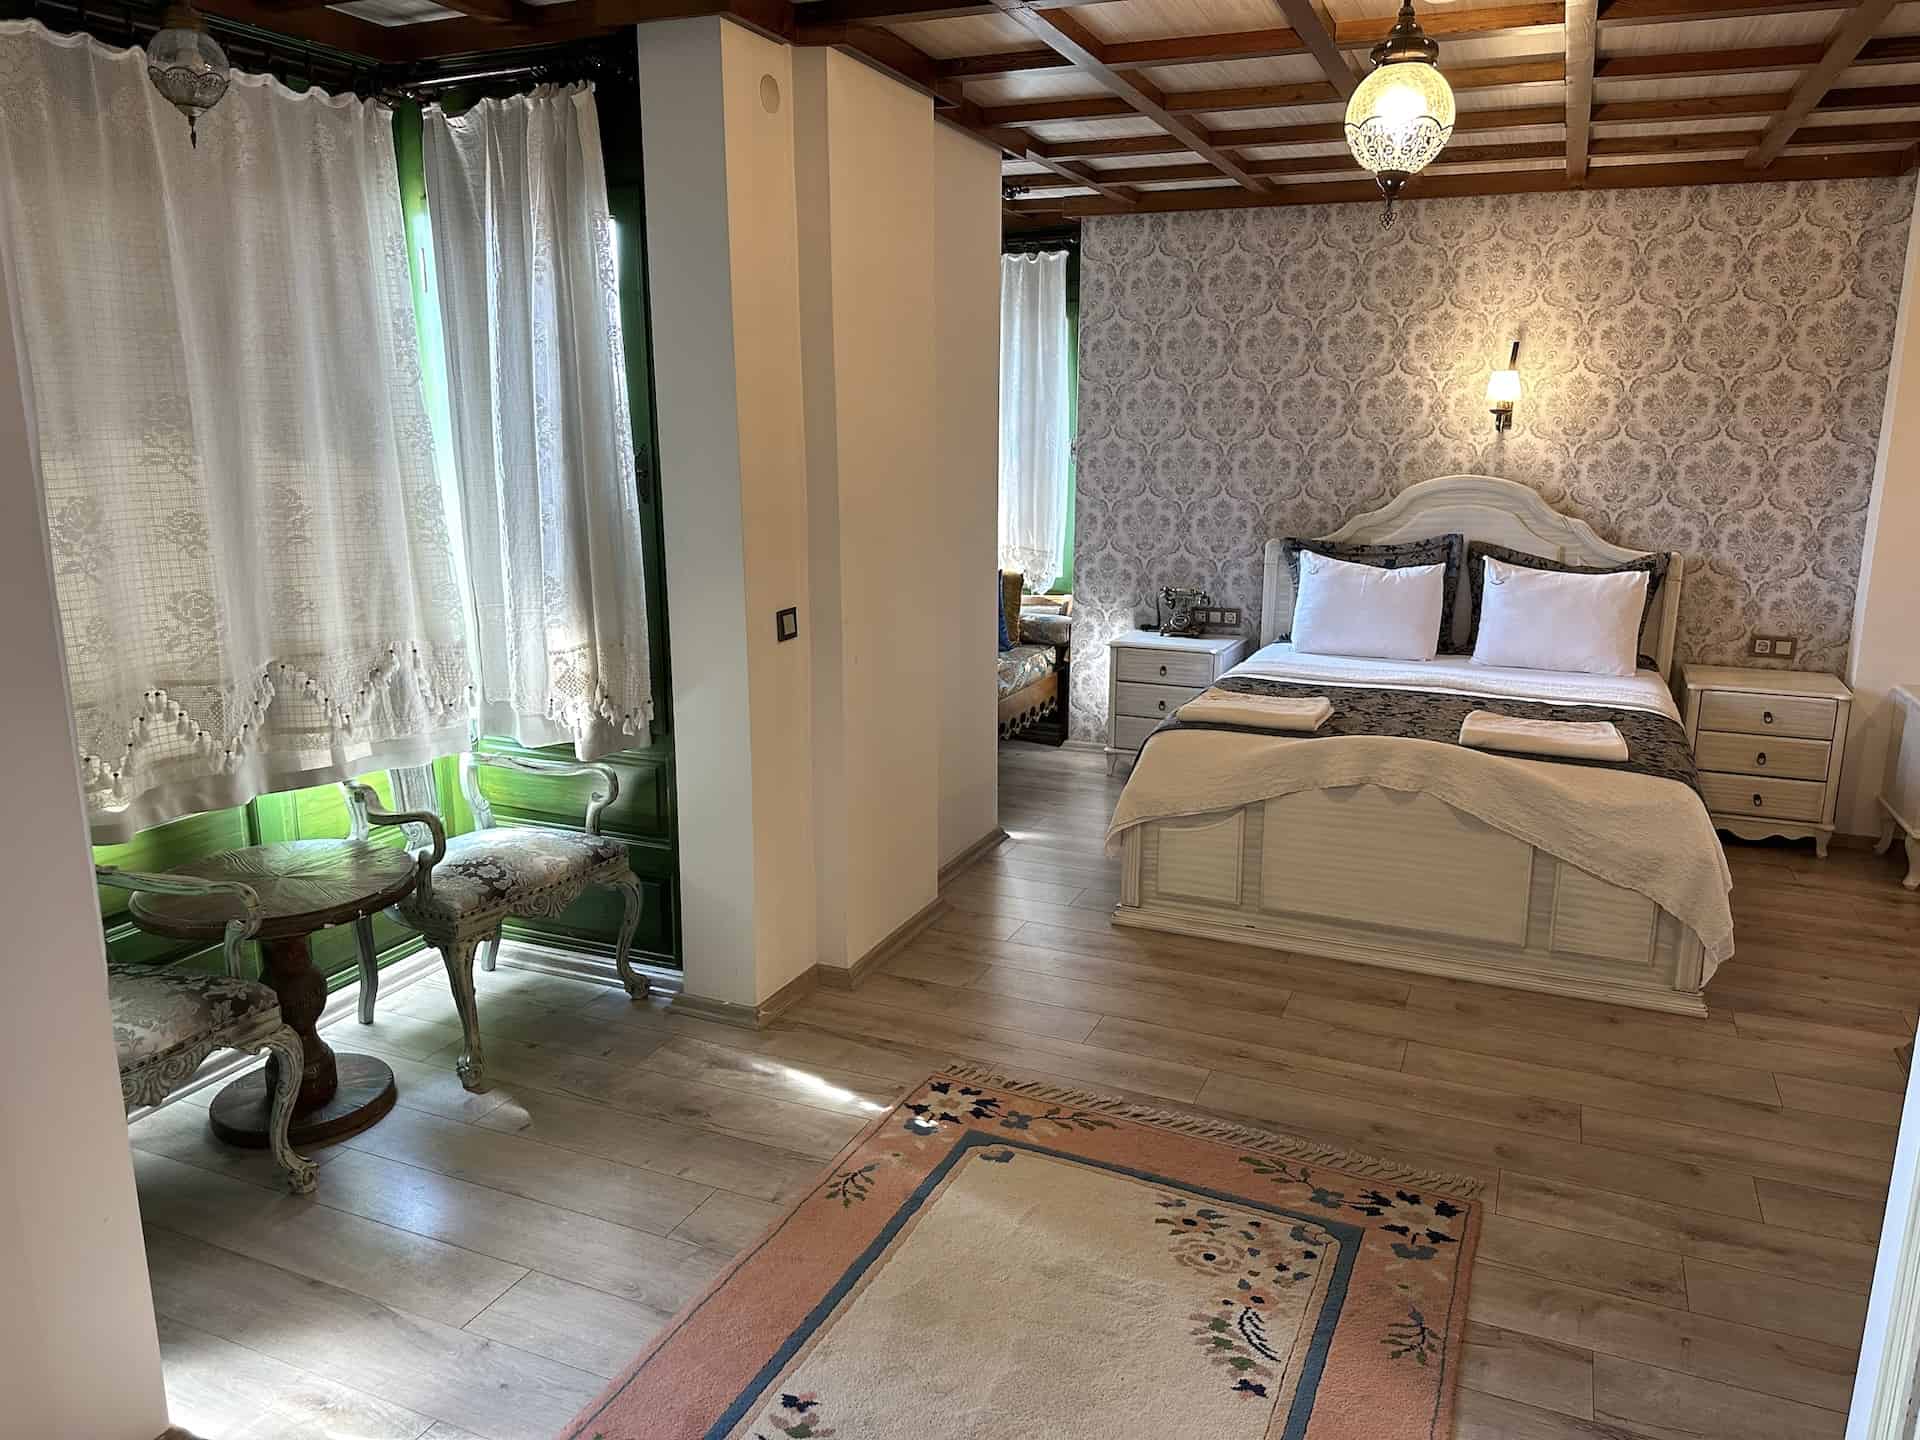 Deluxe room at Celsus Hotel in Selçuk, Turkey